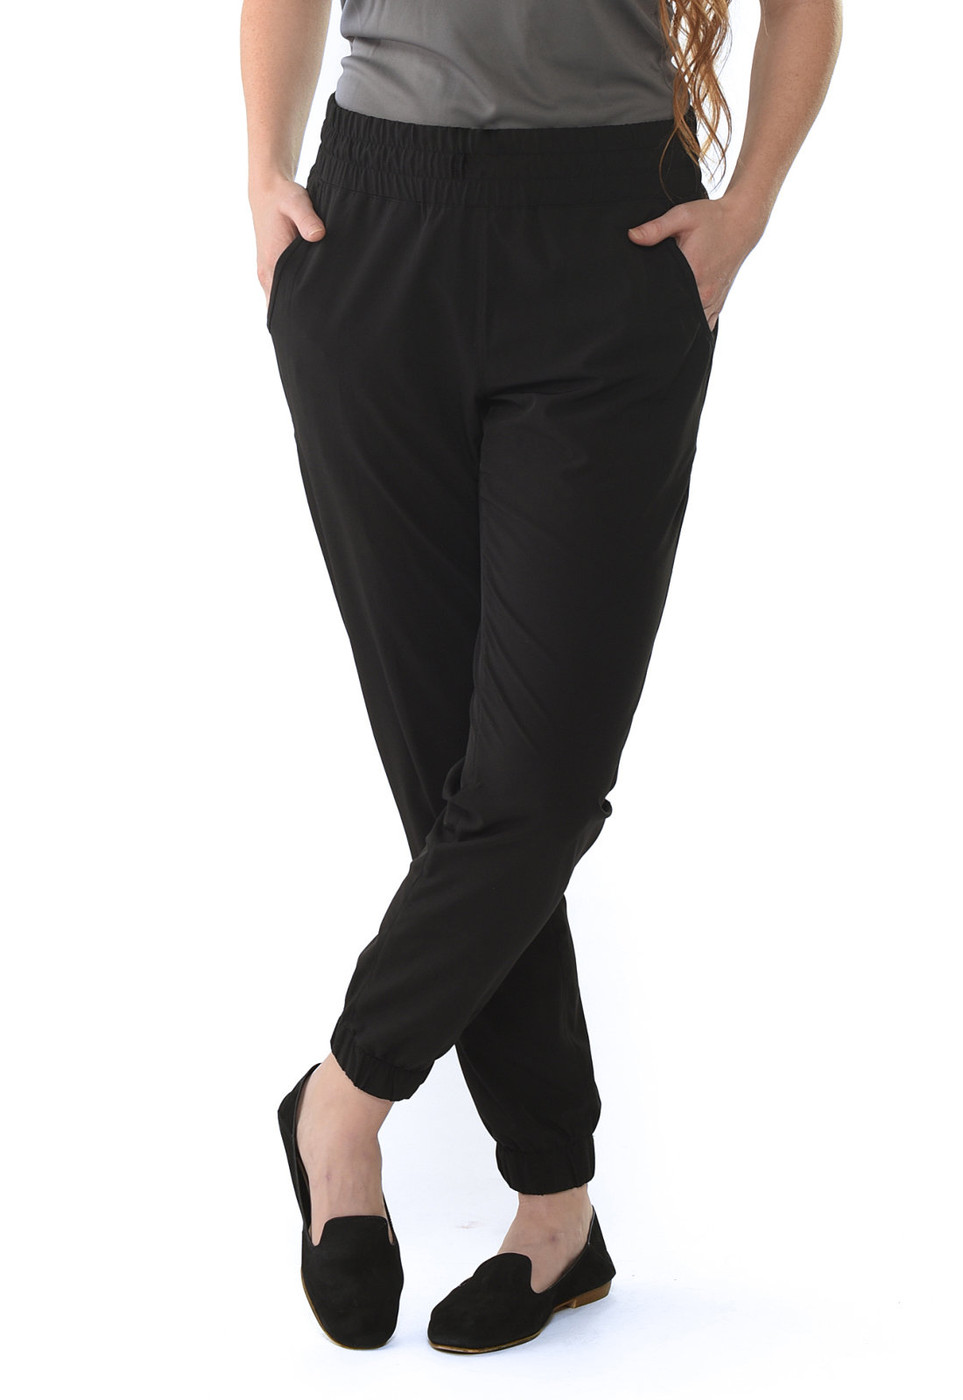 Carolyn Design Elastic Pants